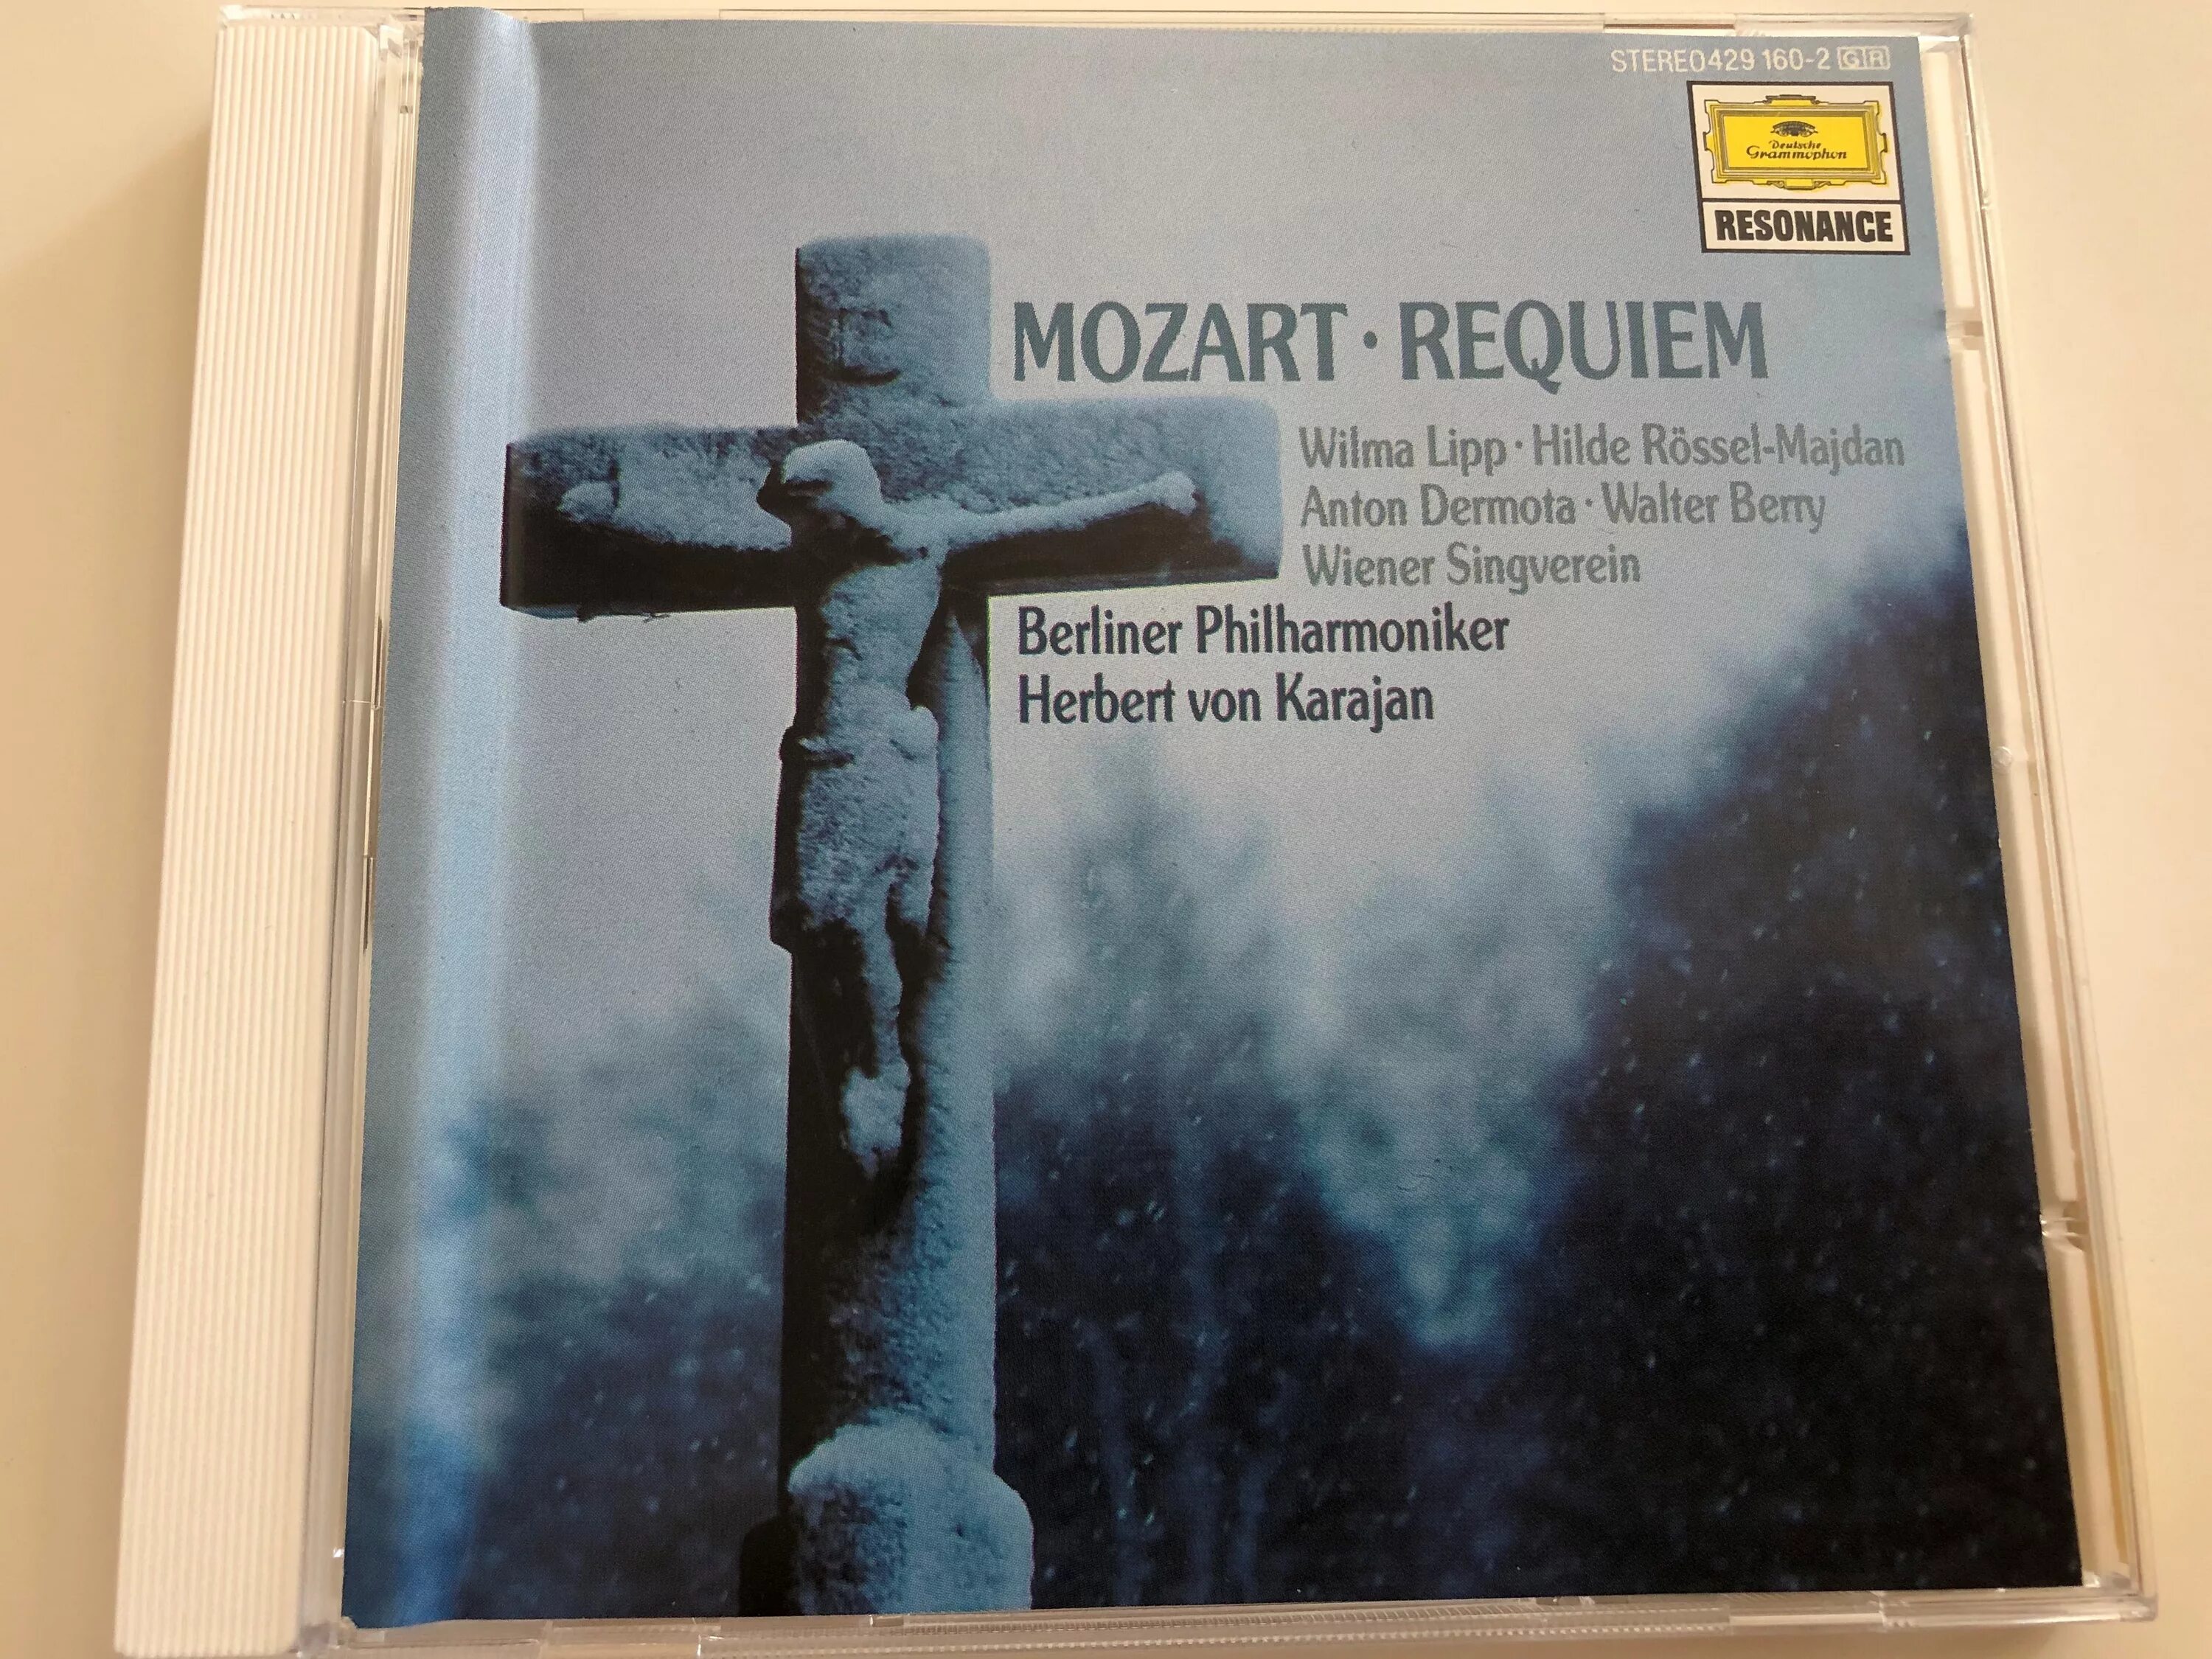 Моцарт - Реквием (Караян 1987). Моцарт Реквием обложка. Mozart Requiem / Herbert von Karajan.